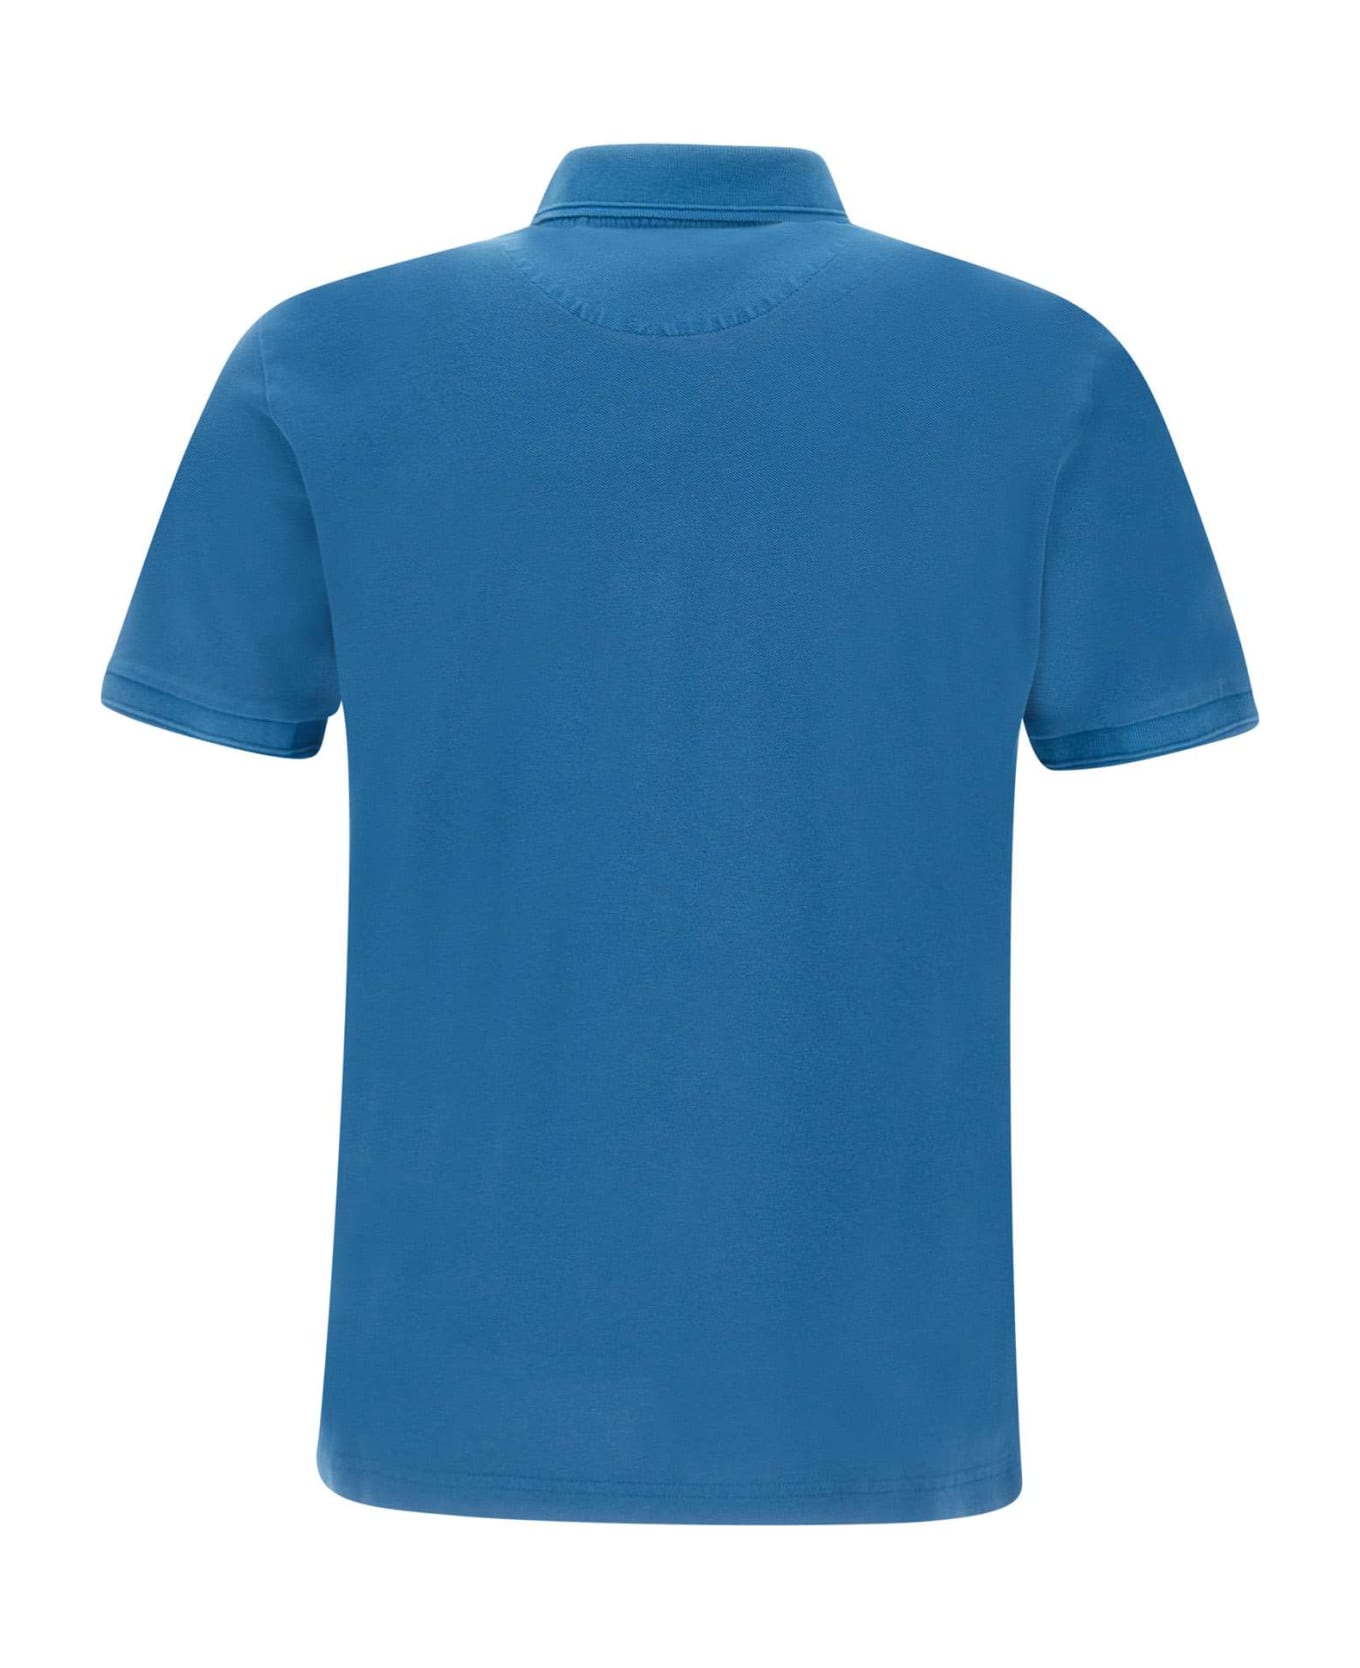 Woolrich 'mackinack' Cotton Piquet Polo Shirt - Royal Blue